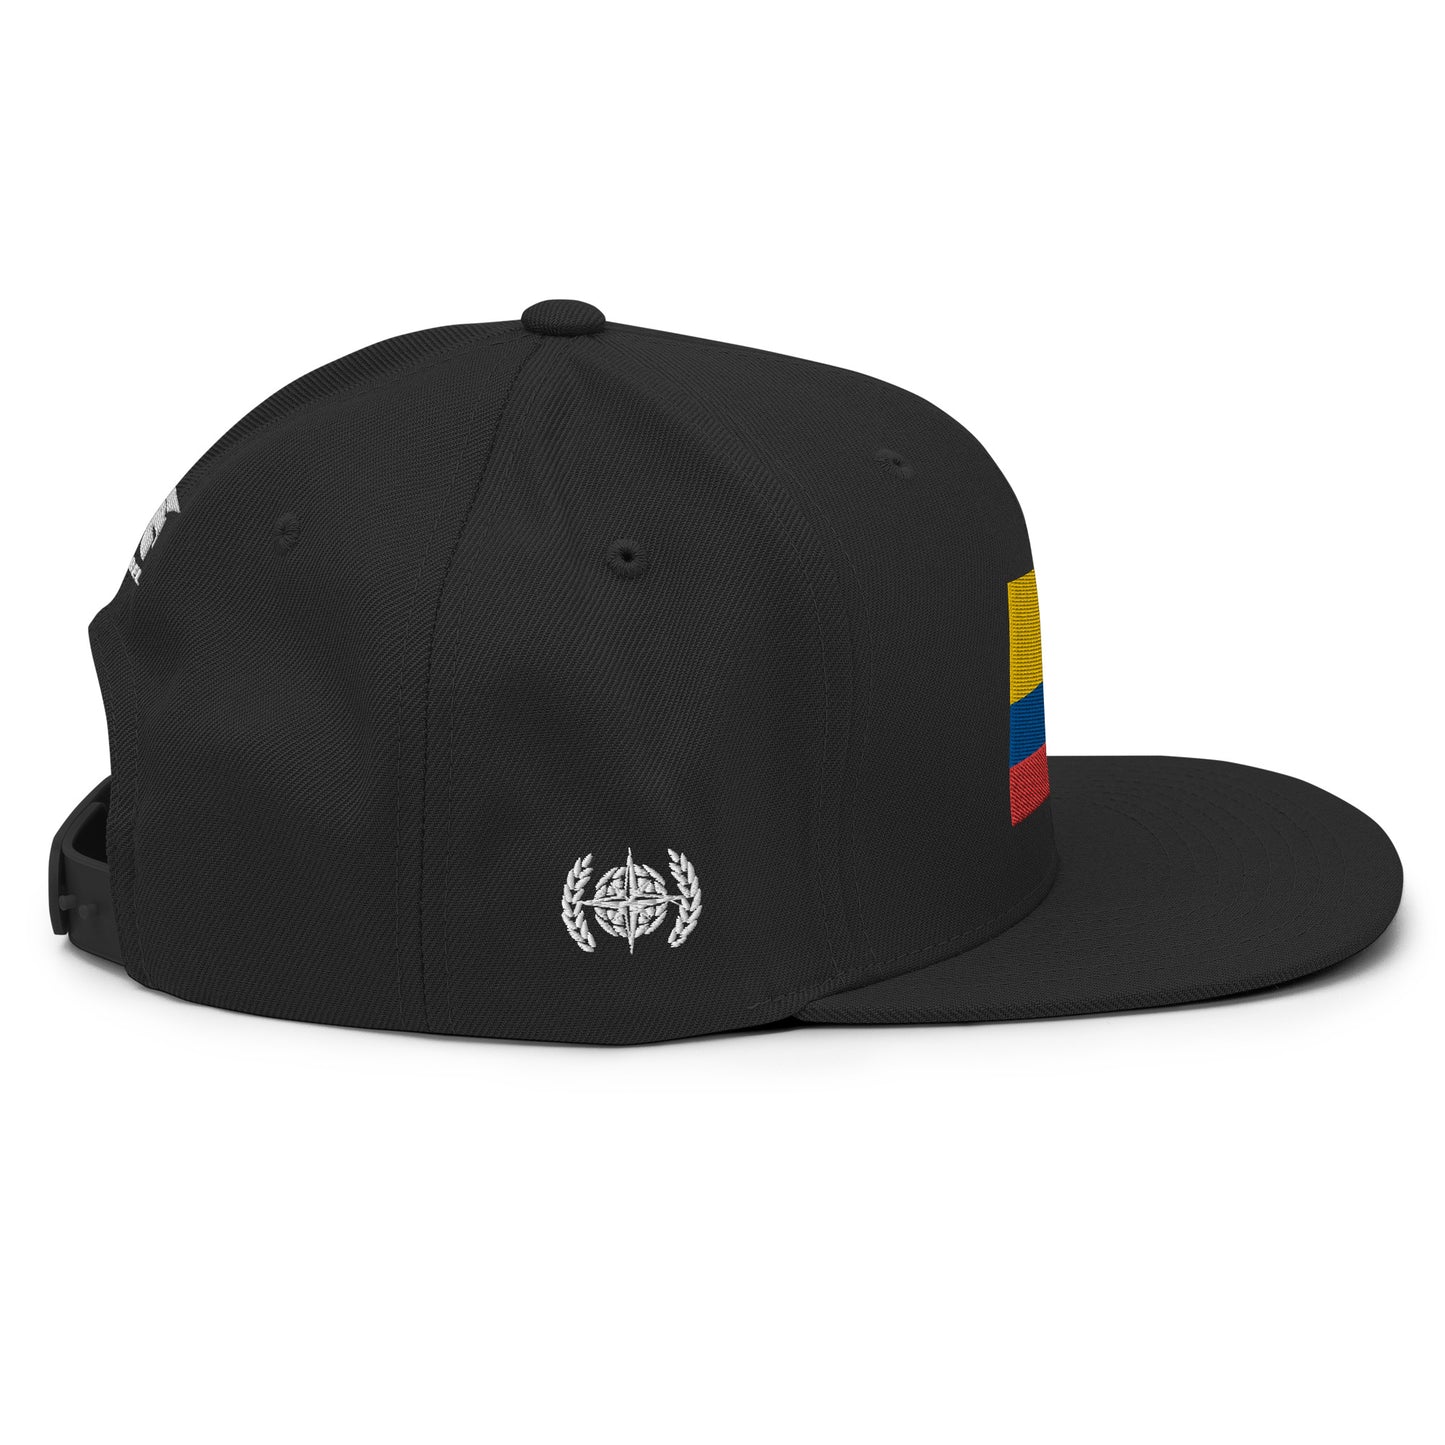 Heritage & Honor Snapback Cap 'Colombia' 2